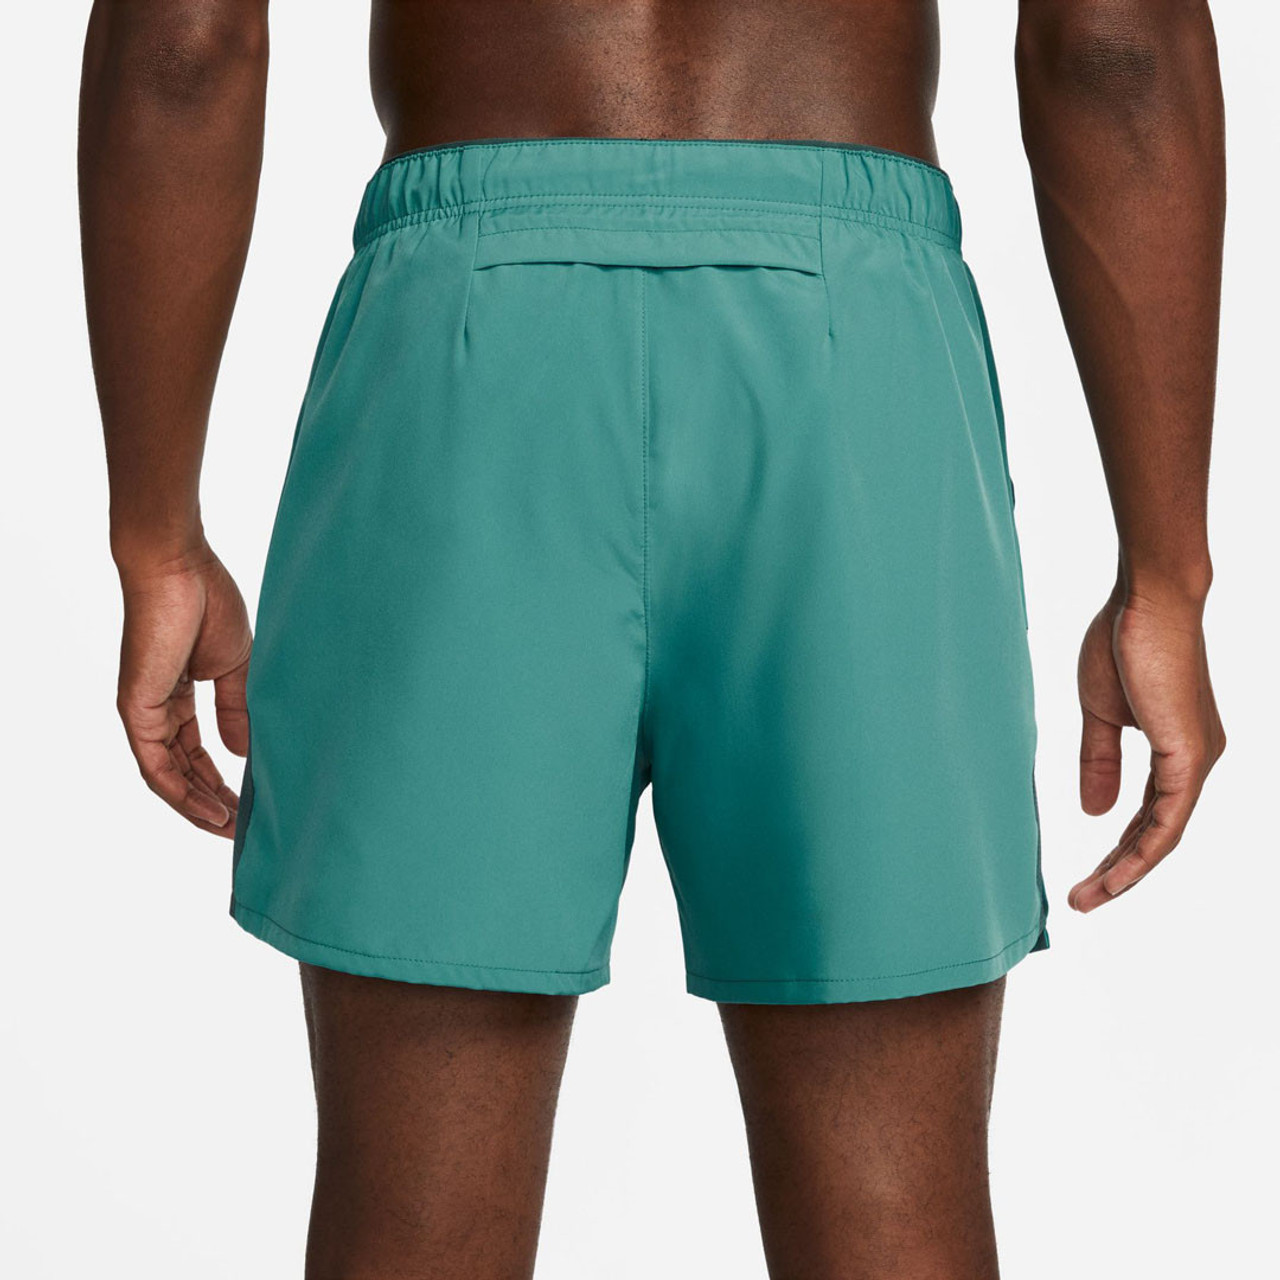 Nike Men's Team Dri Fit Flex Woven Short (With Pockets)